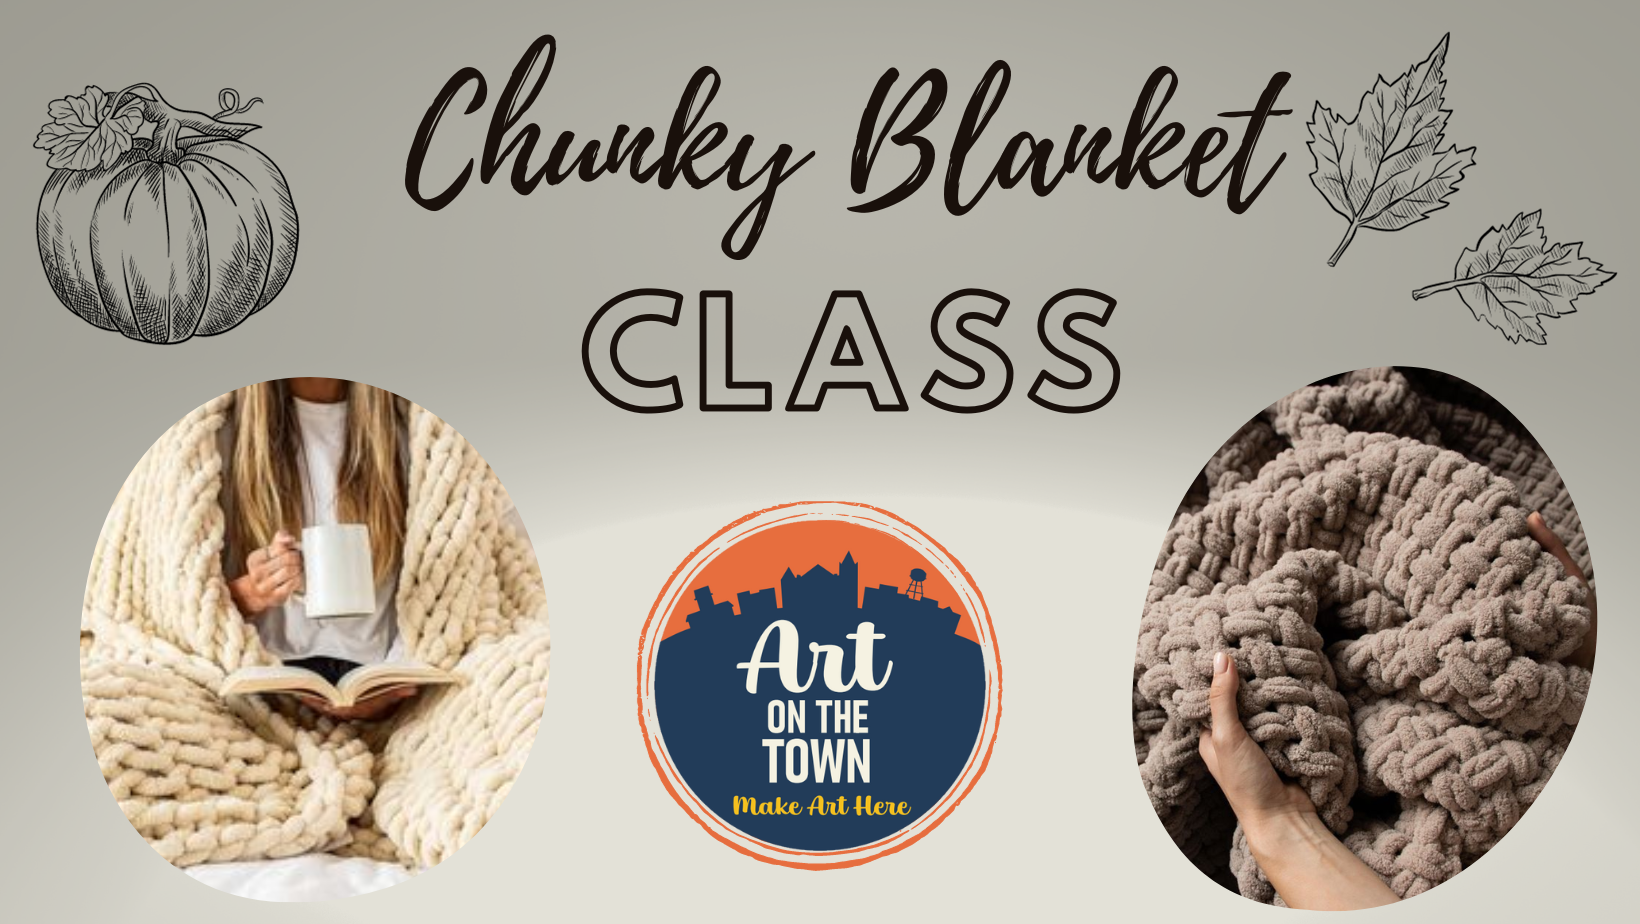 Chunky Blanket Class